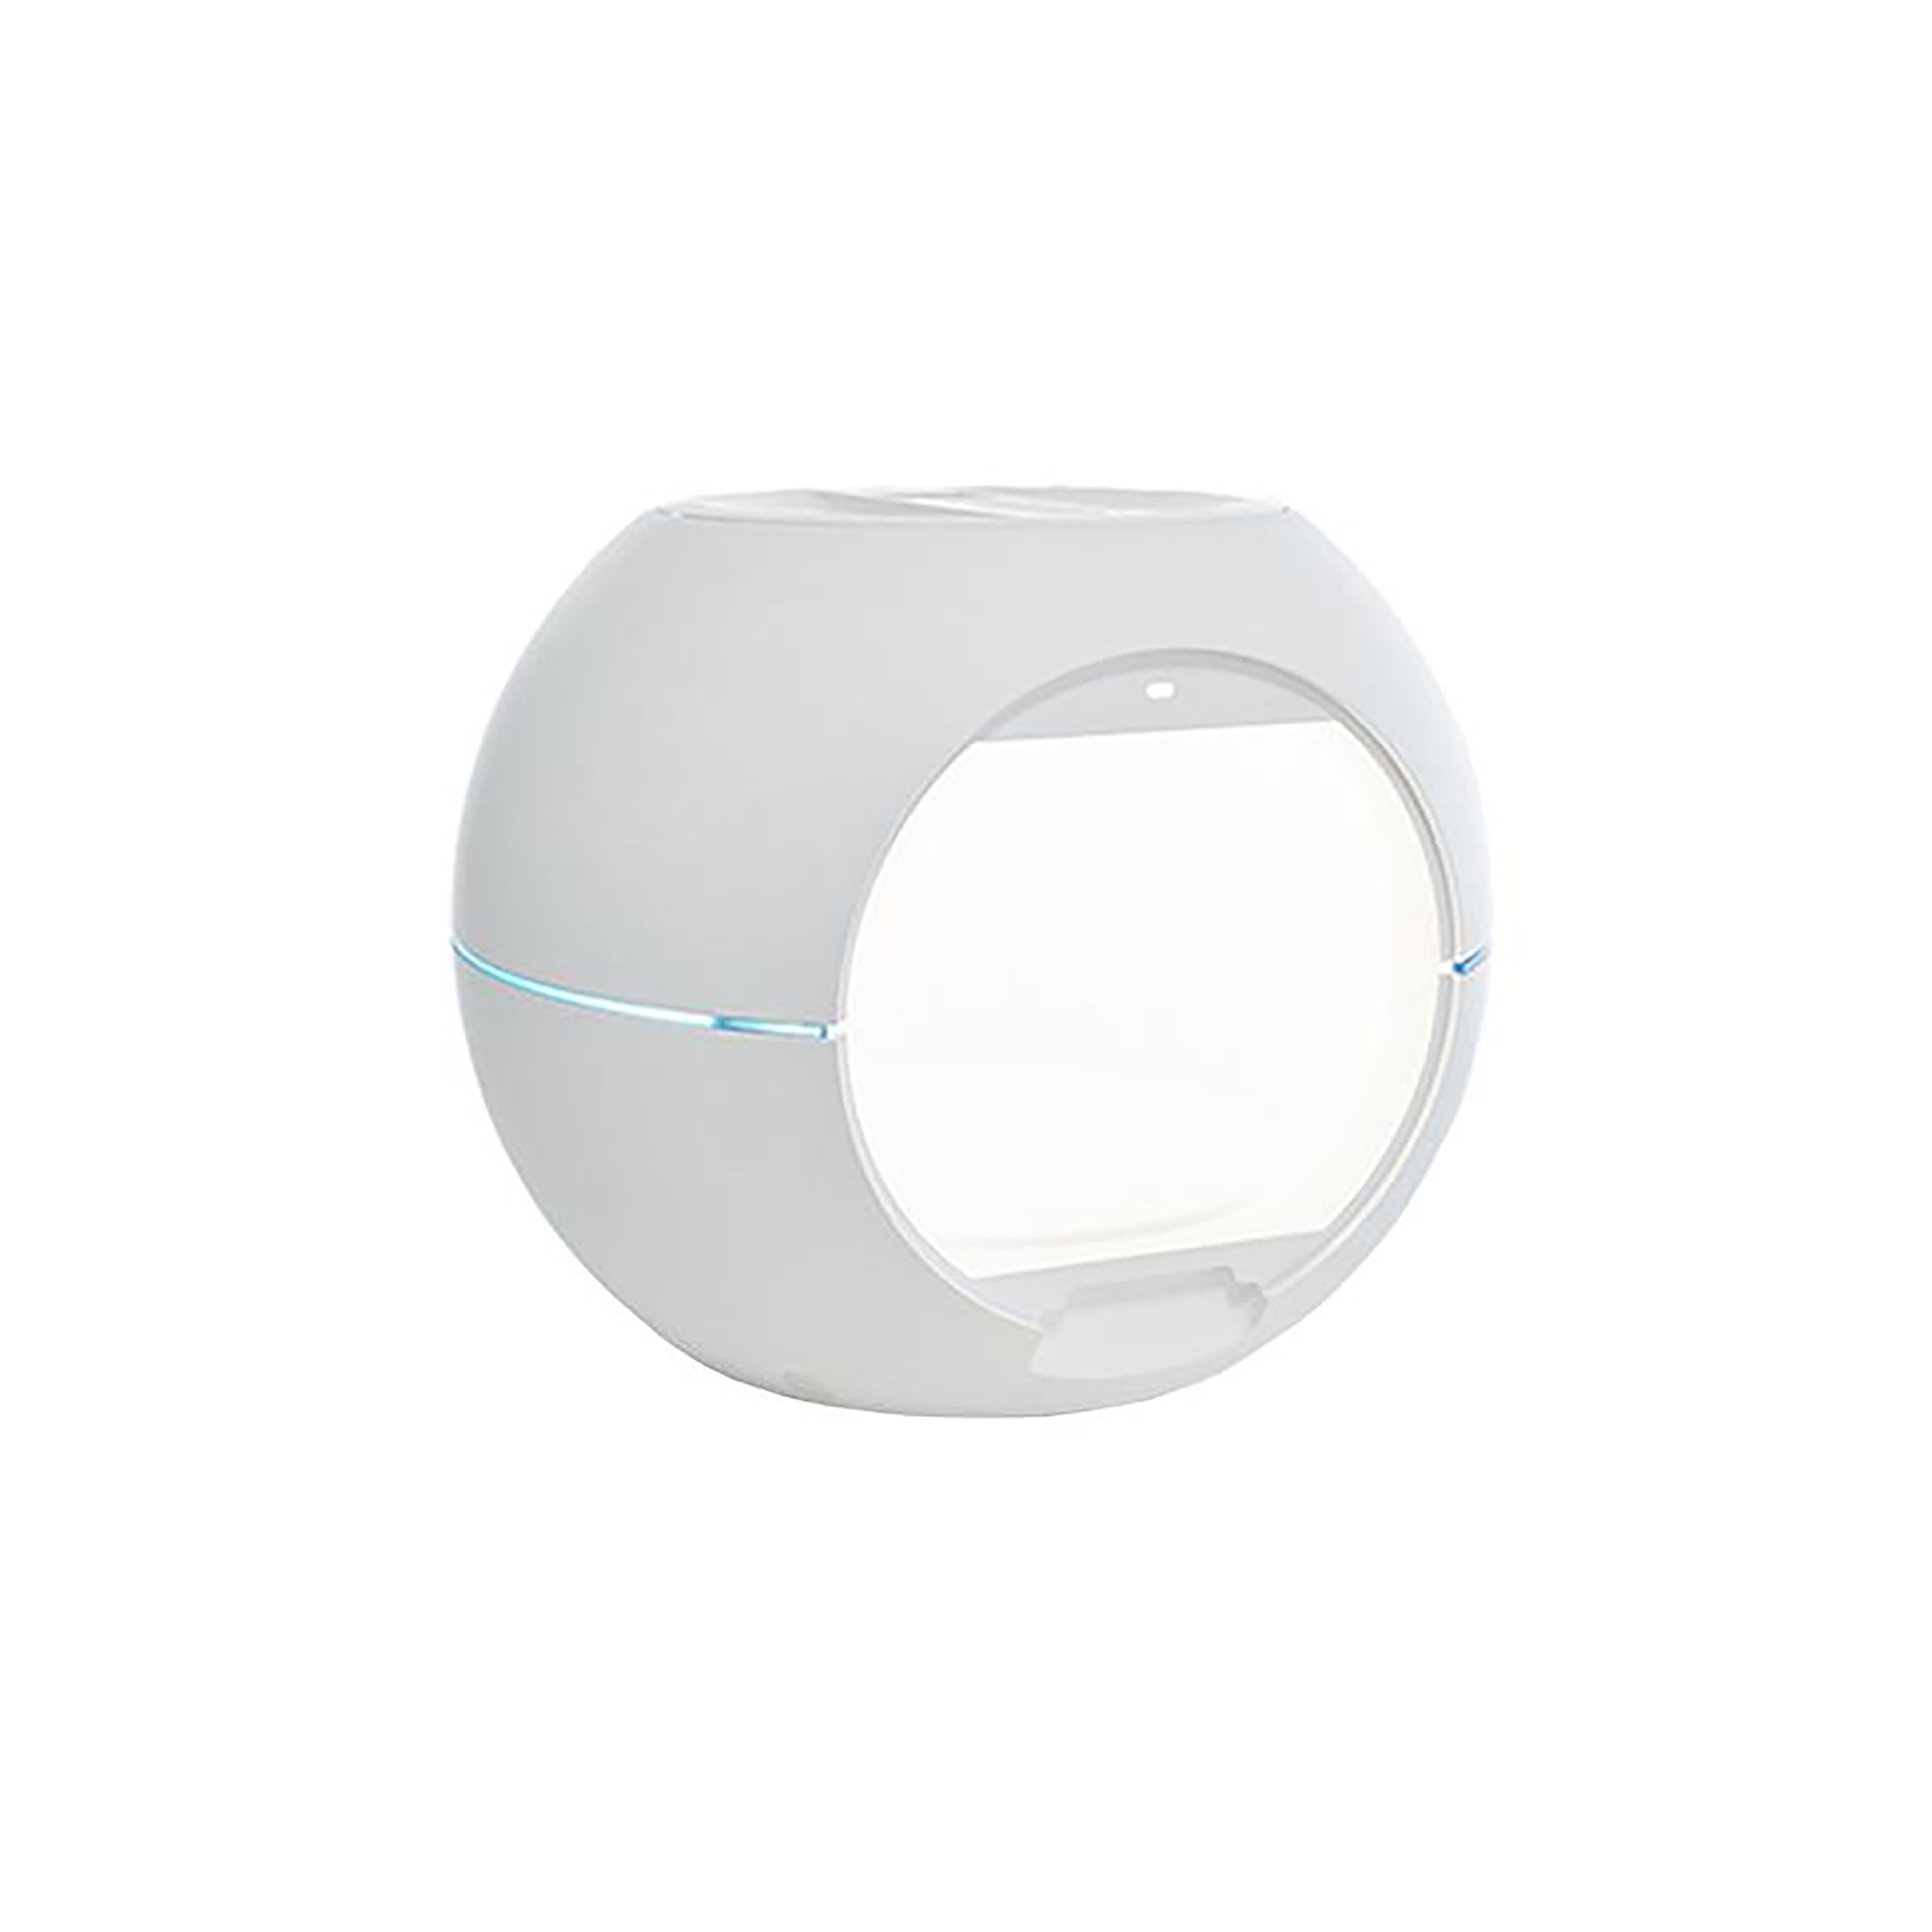 Orangemonkie Foldio 360 Smart Dome -Open Box